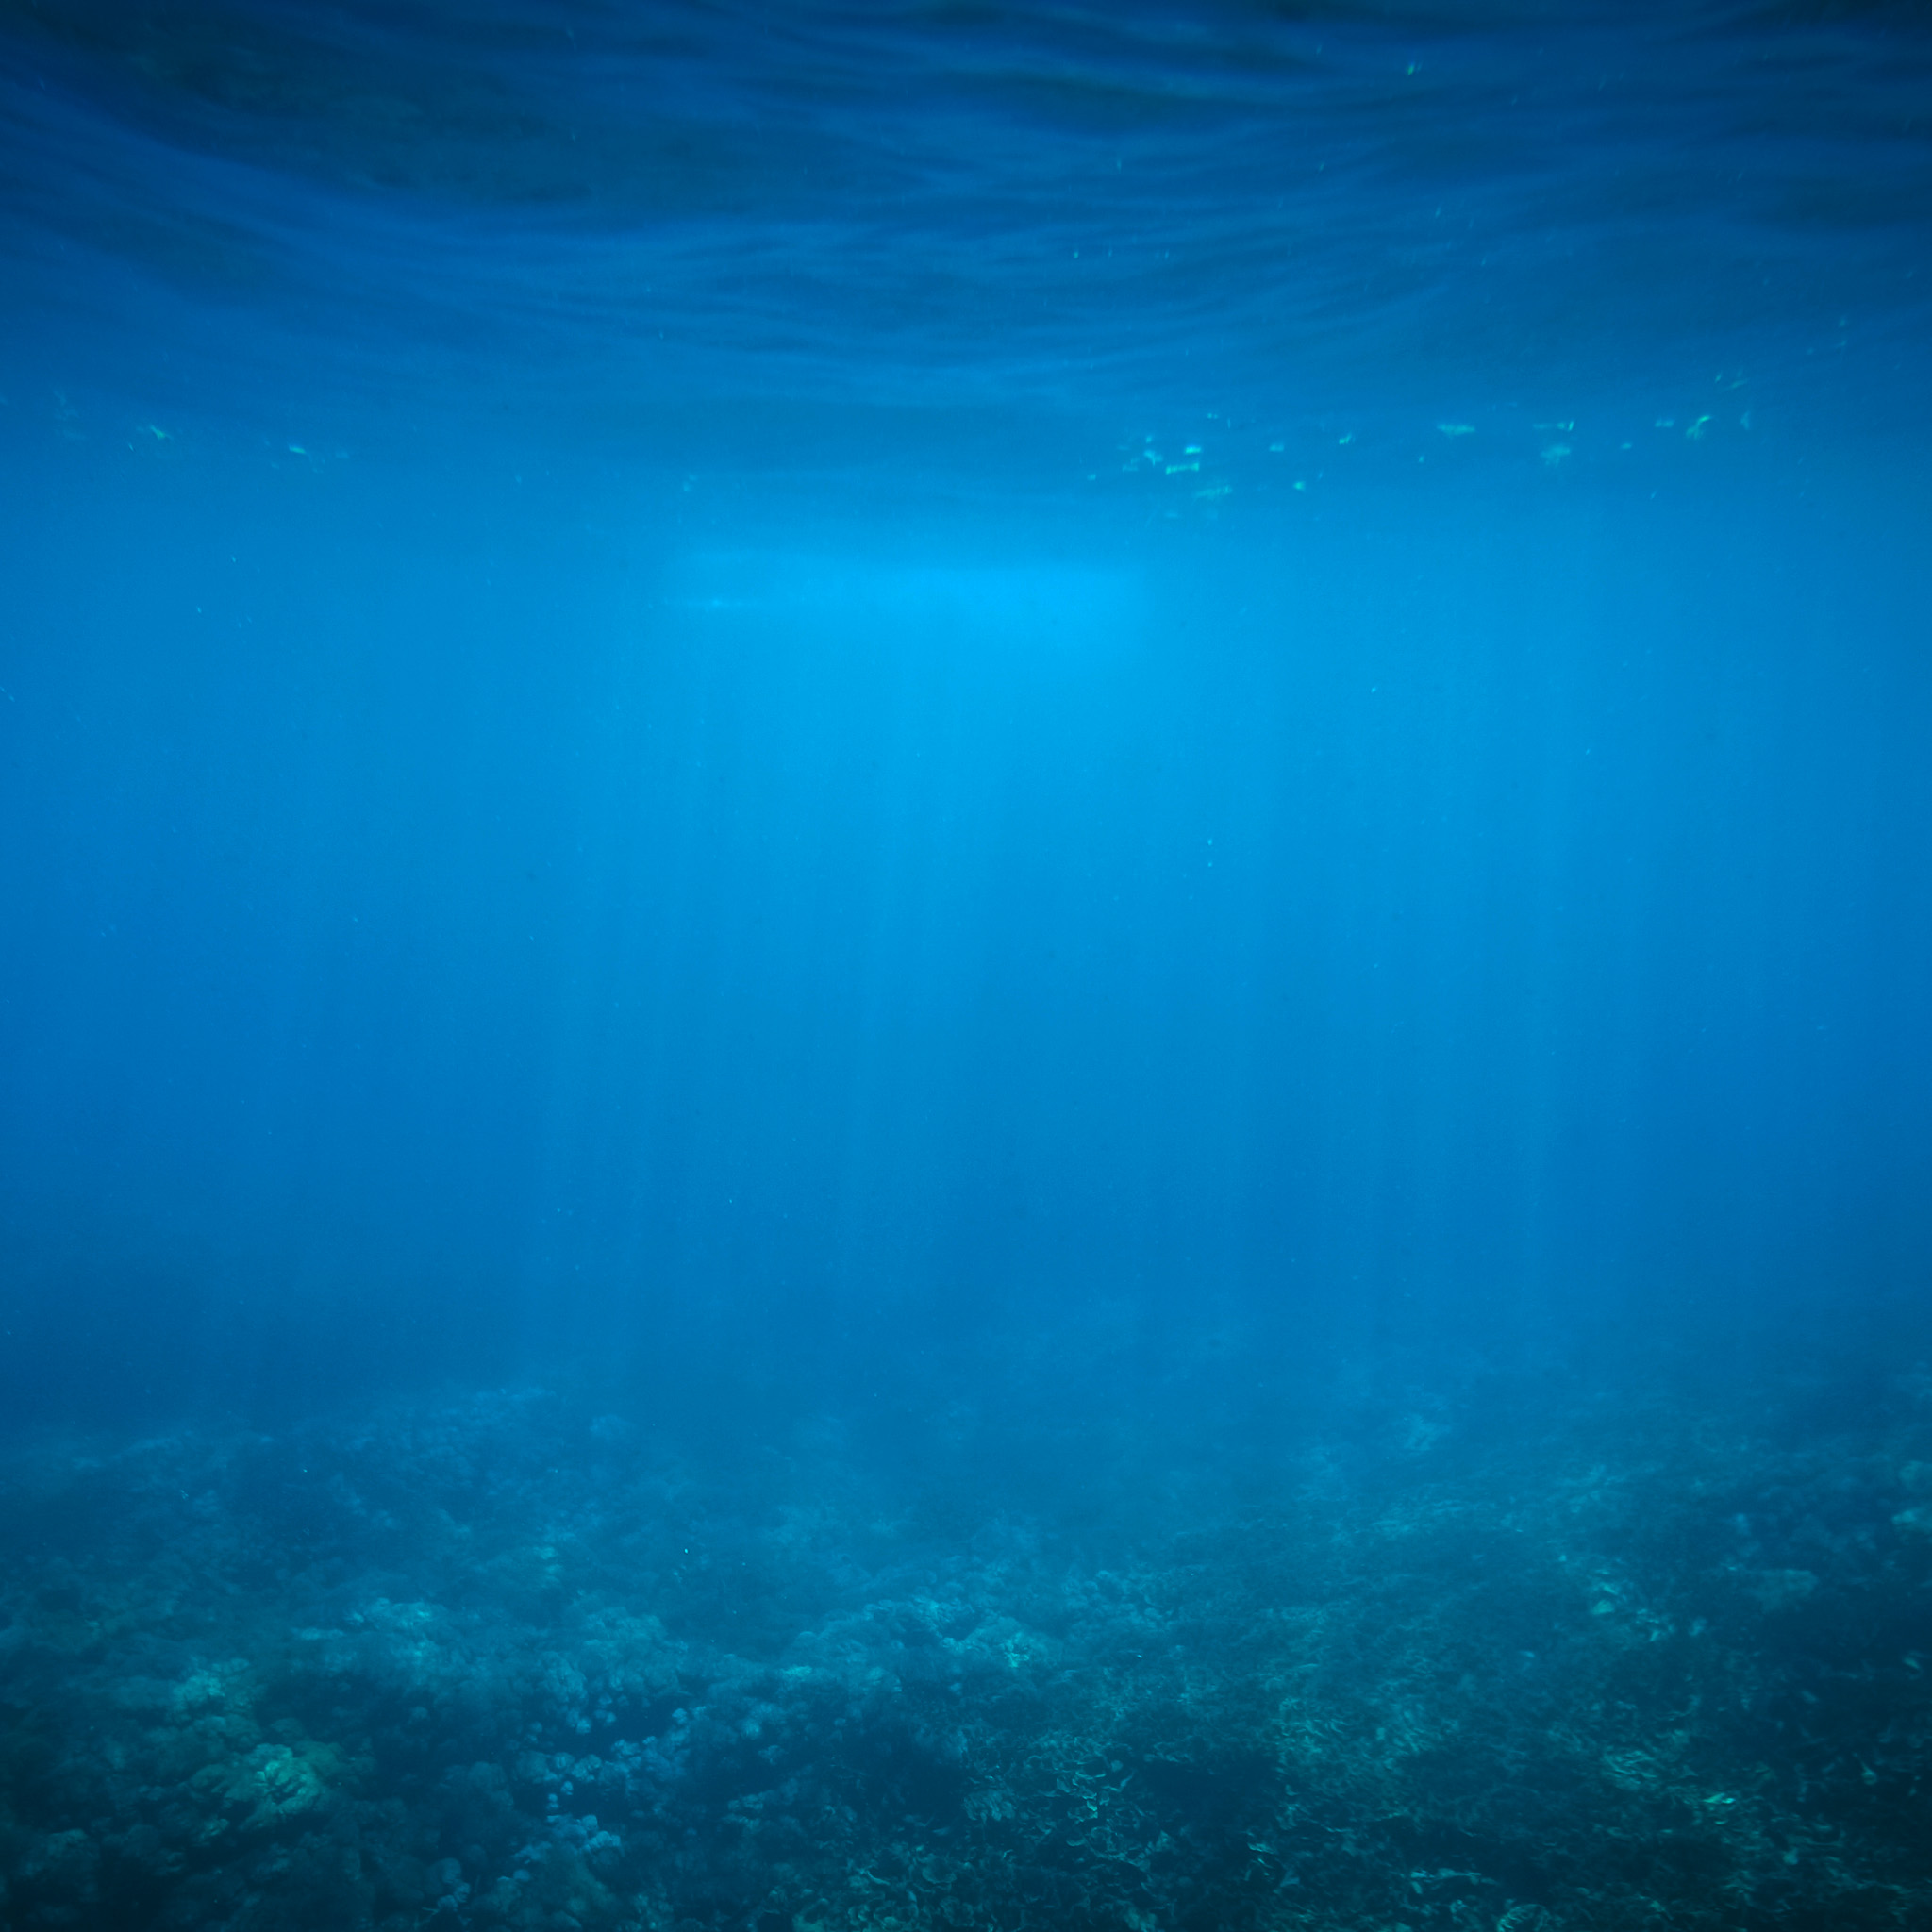 stefanus martanto - underwater blue ipad wallpaper